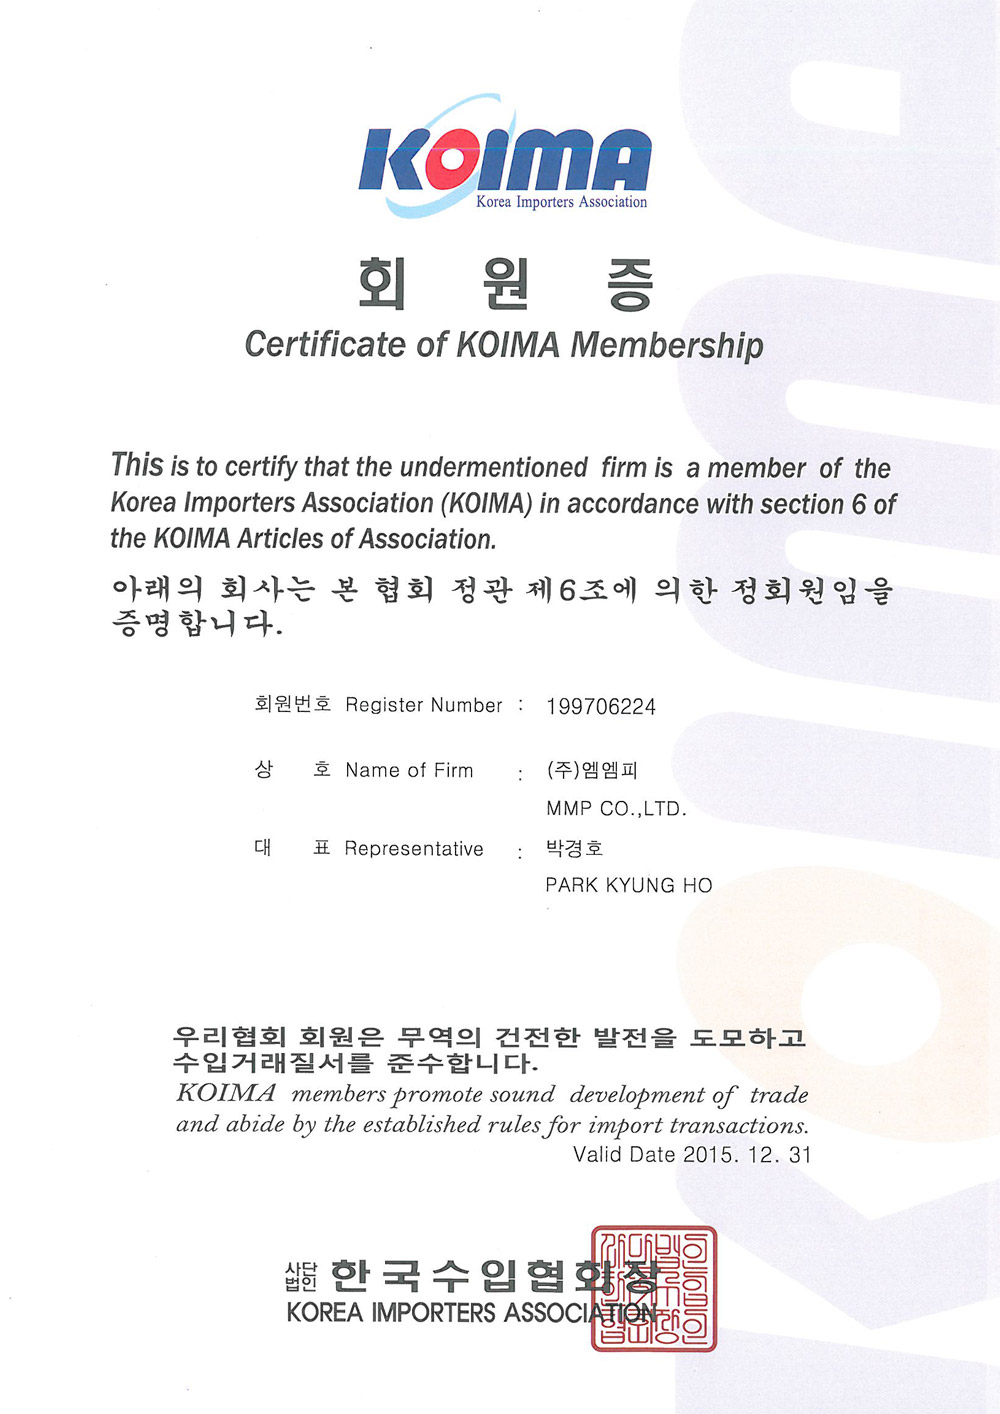 Membership of Korea Importers Association